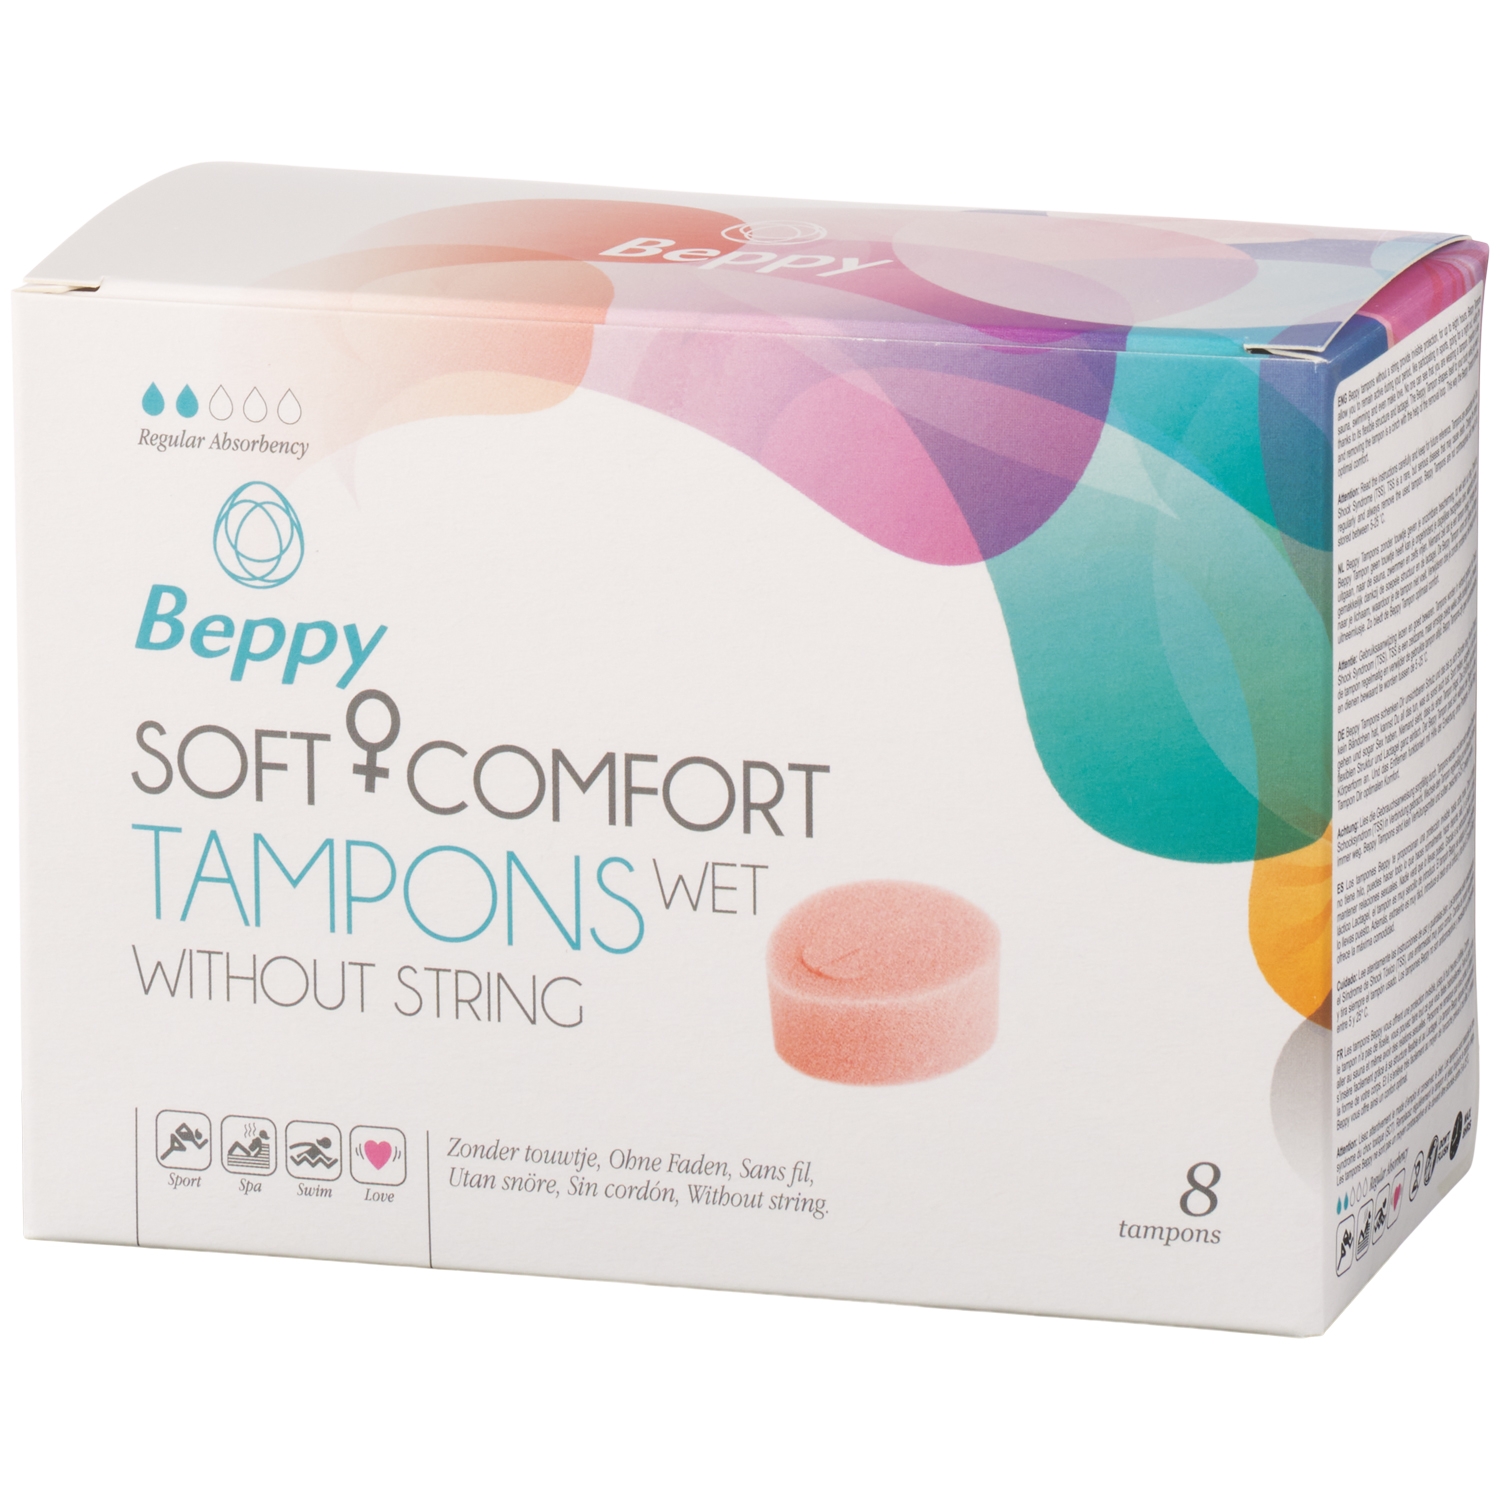 Beppy Soft + Comfort Tampons Wet 8 pcs - Pink